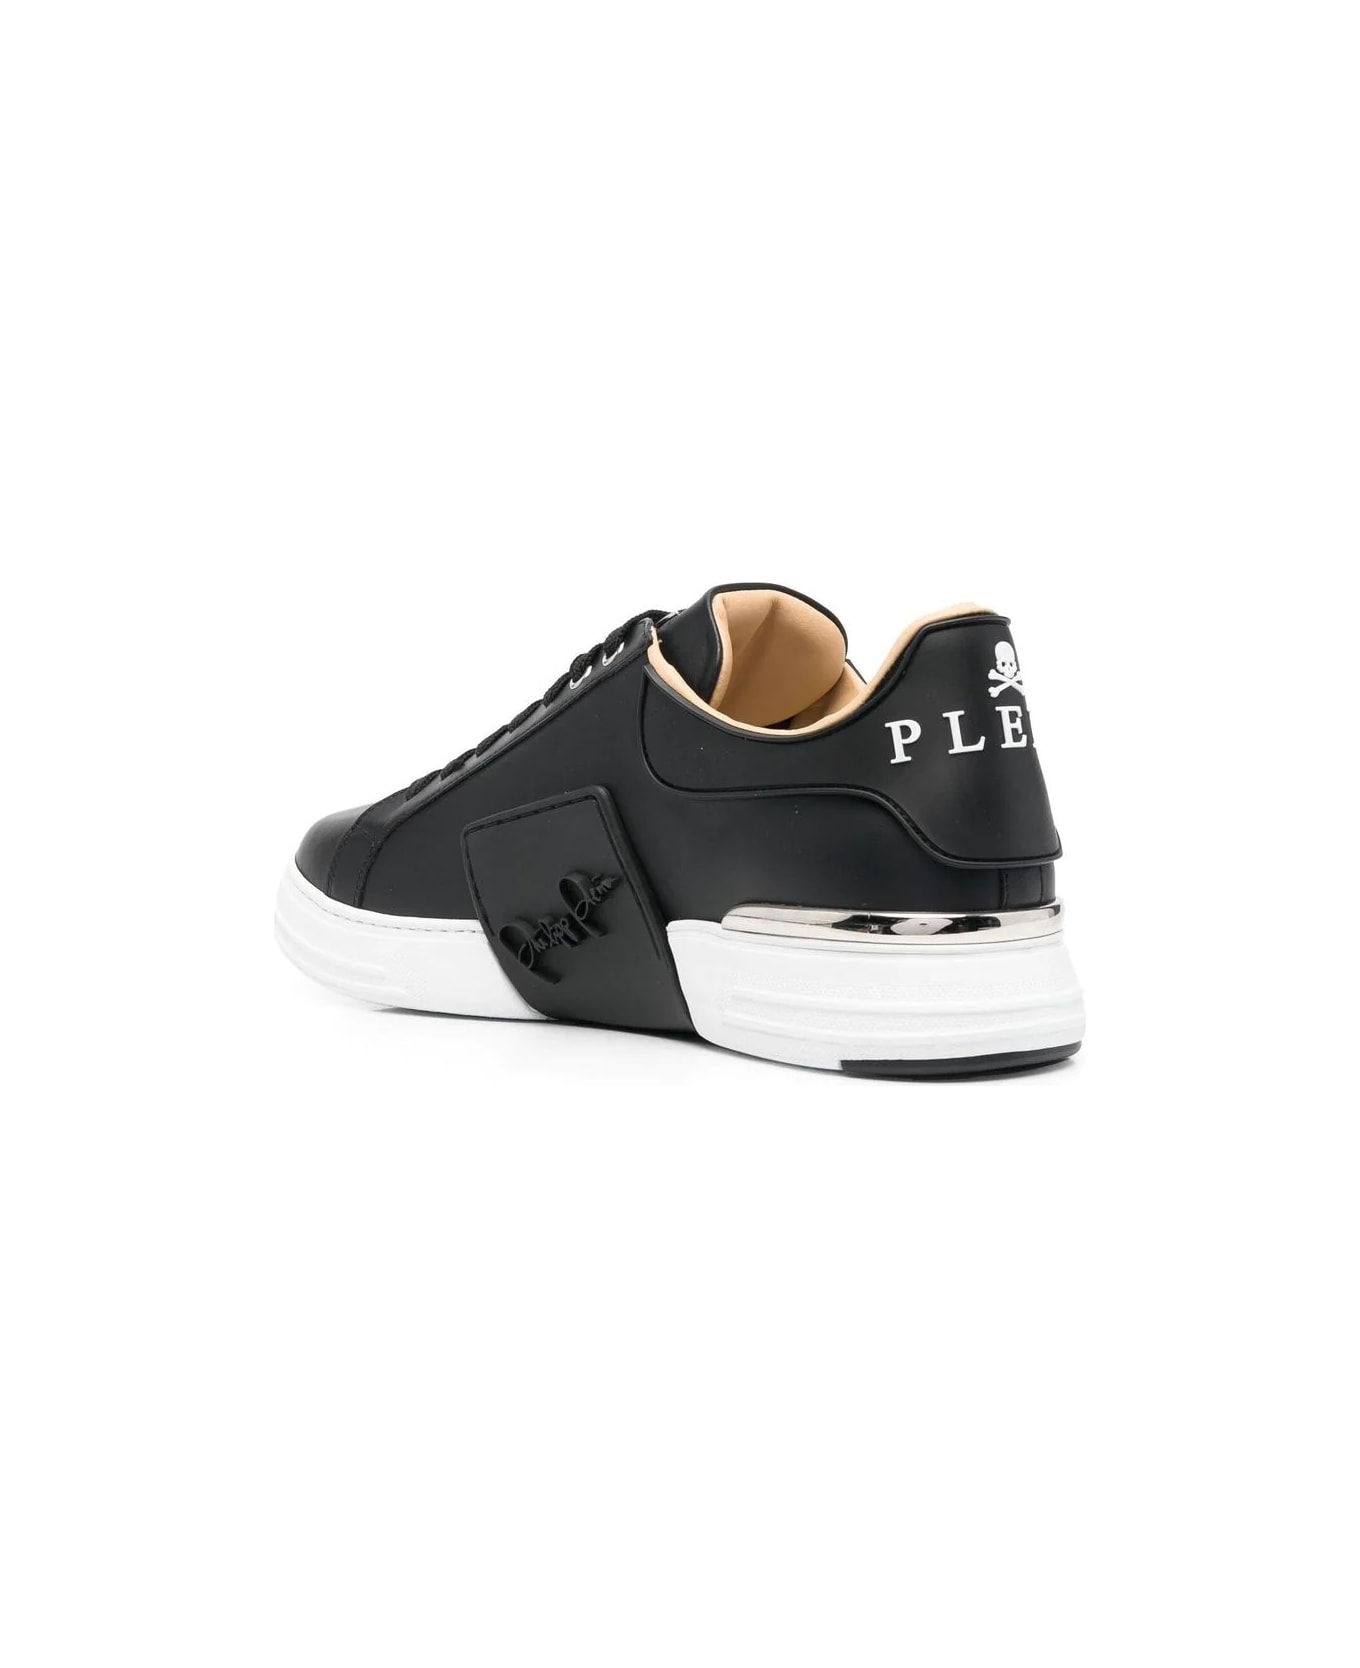 Philipp Plein Hexagon Sneakers In Black Leather - Black スニーカー